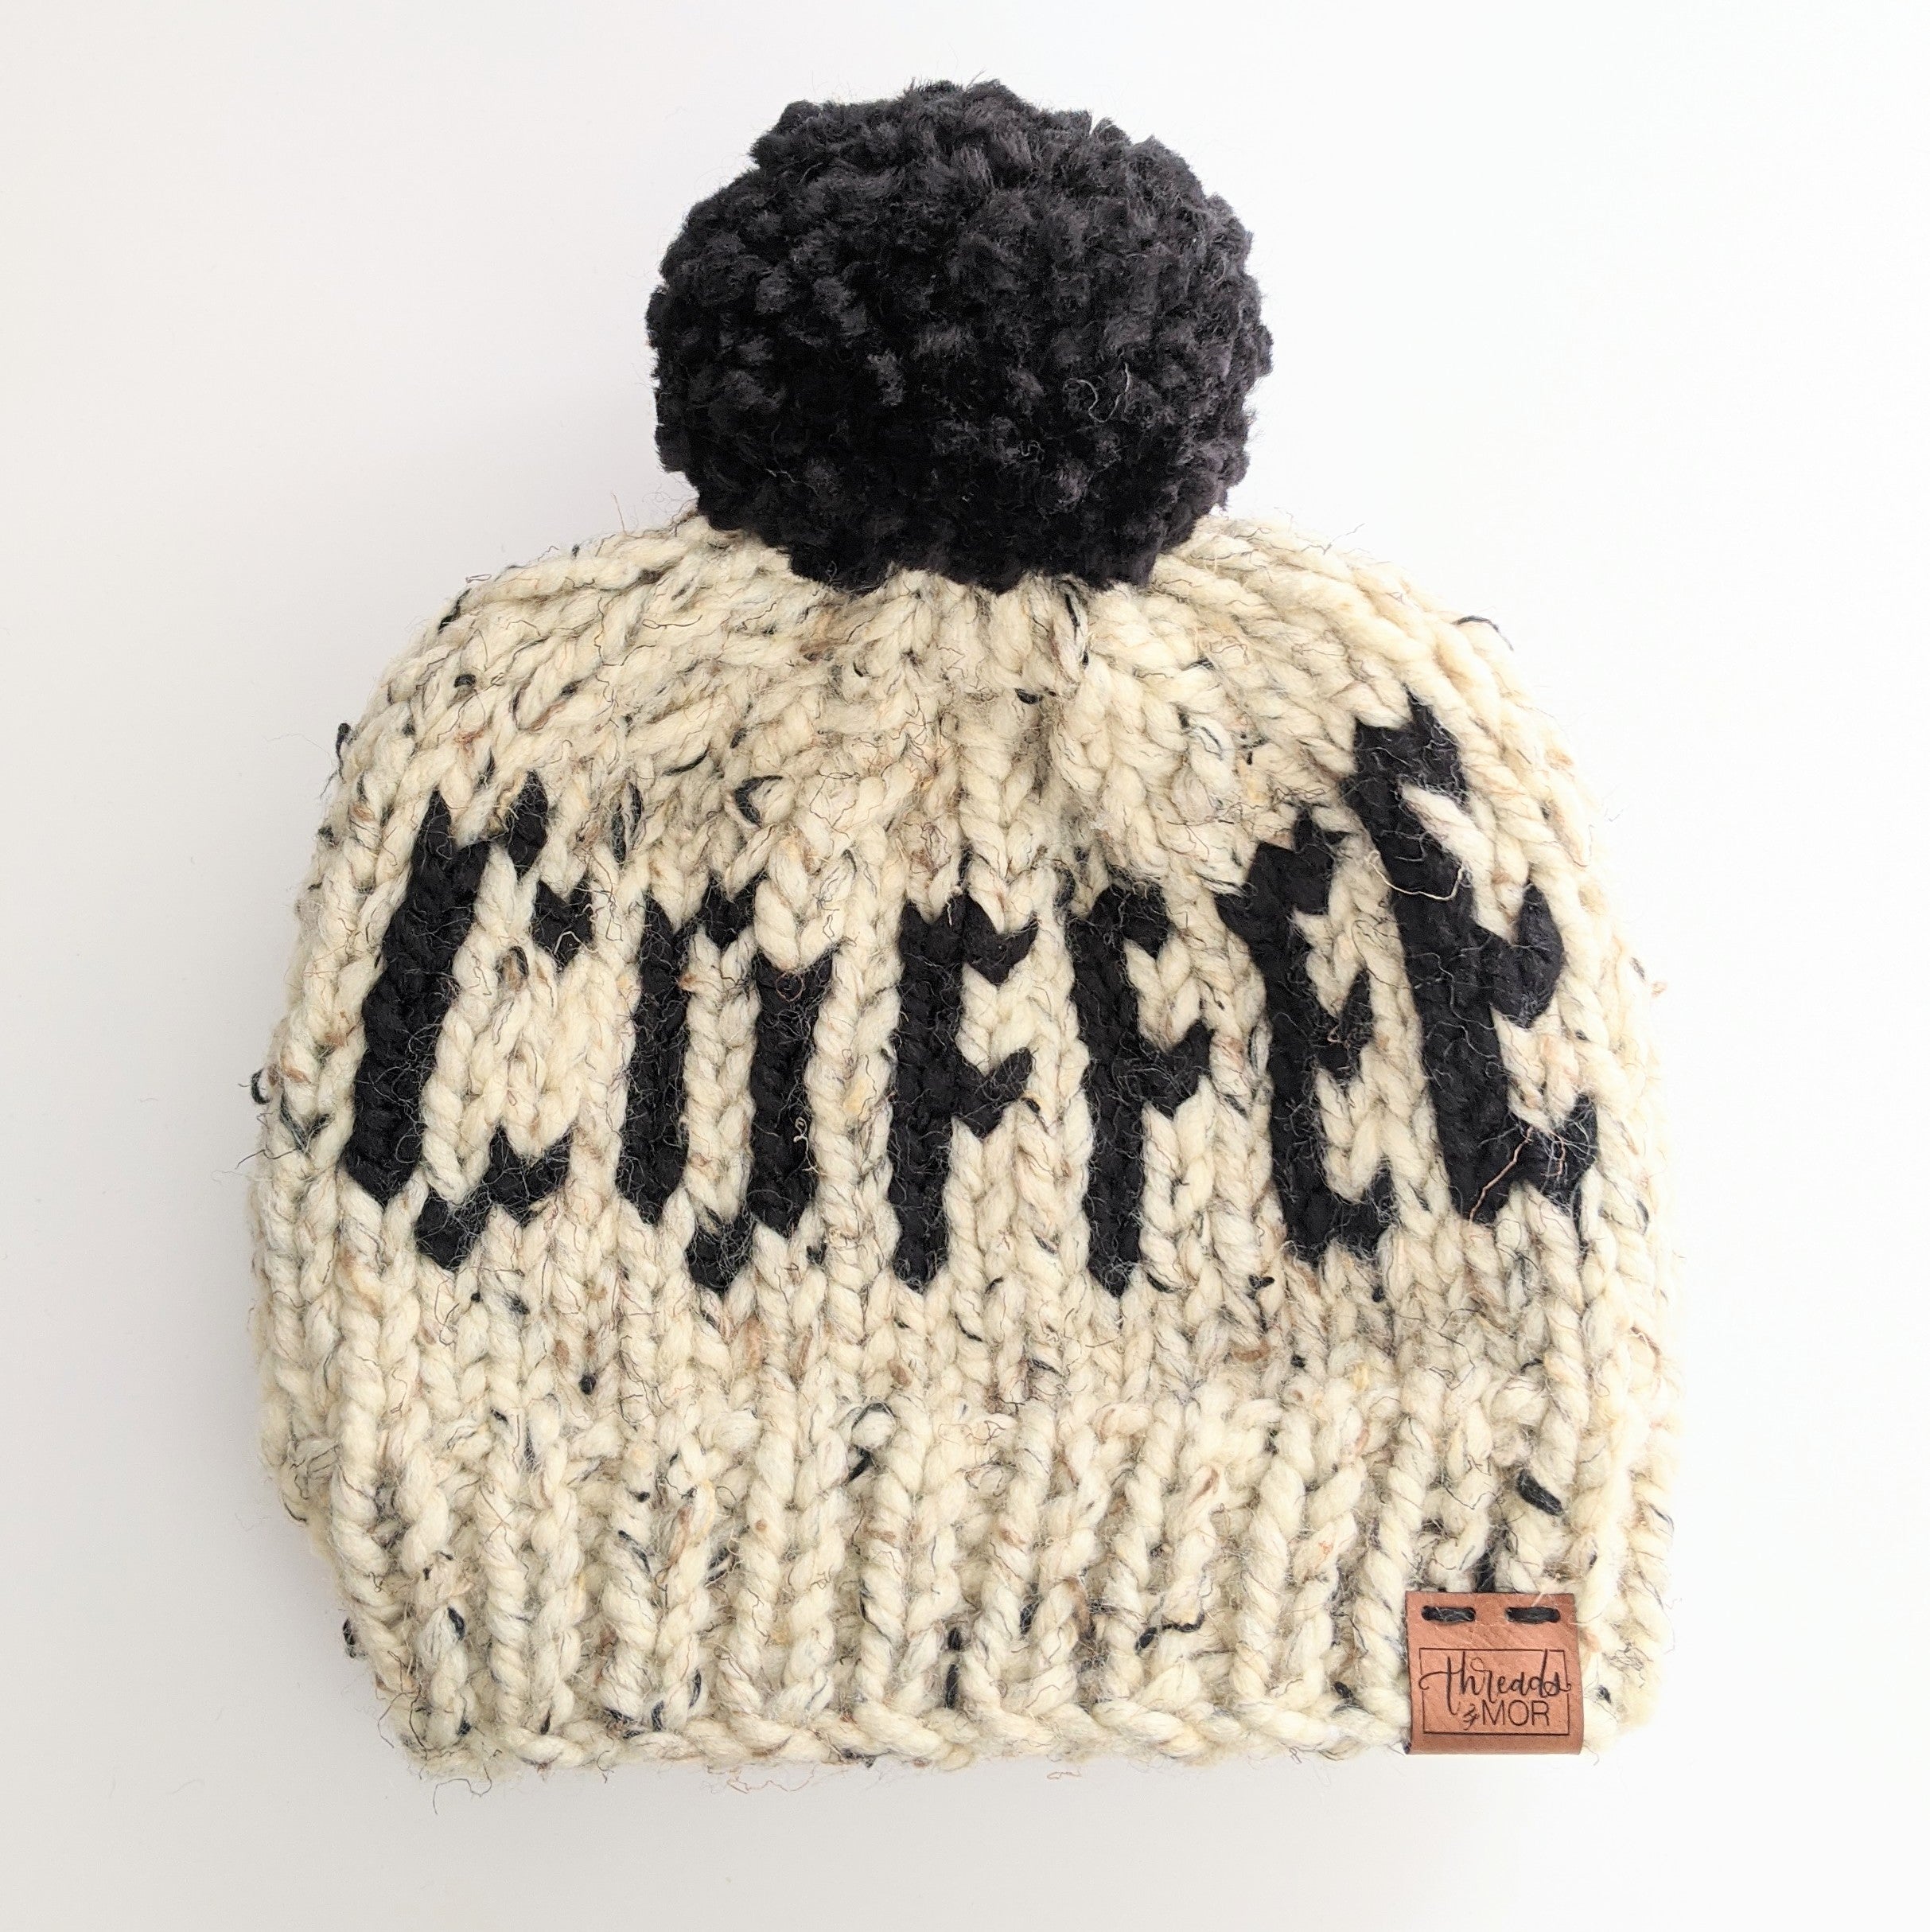 Coffee Knit Beanie Hat